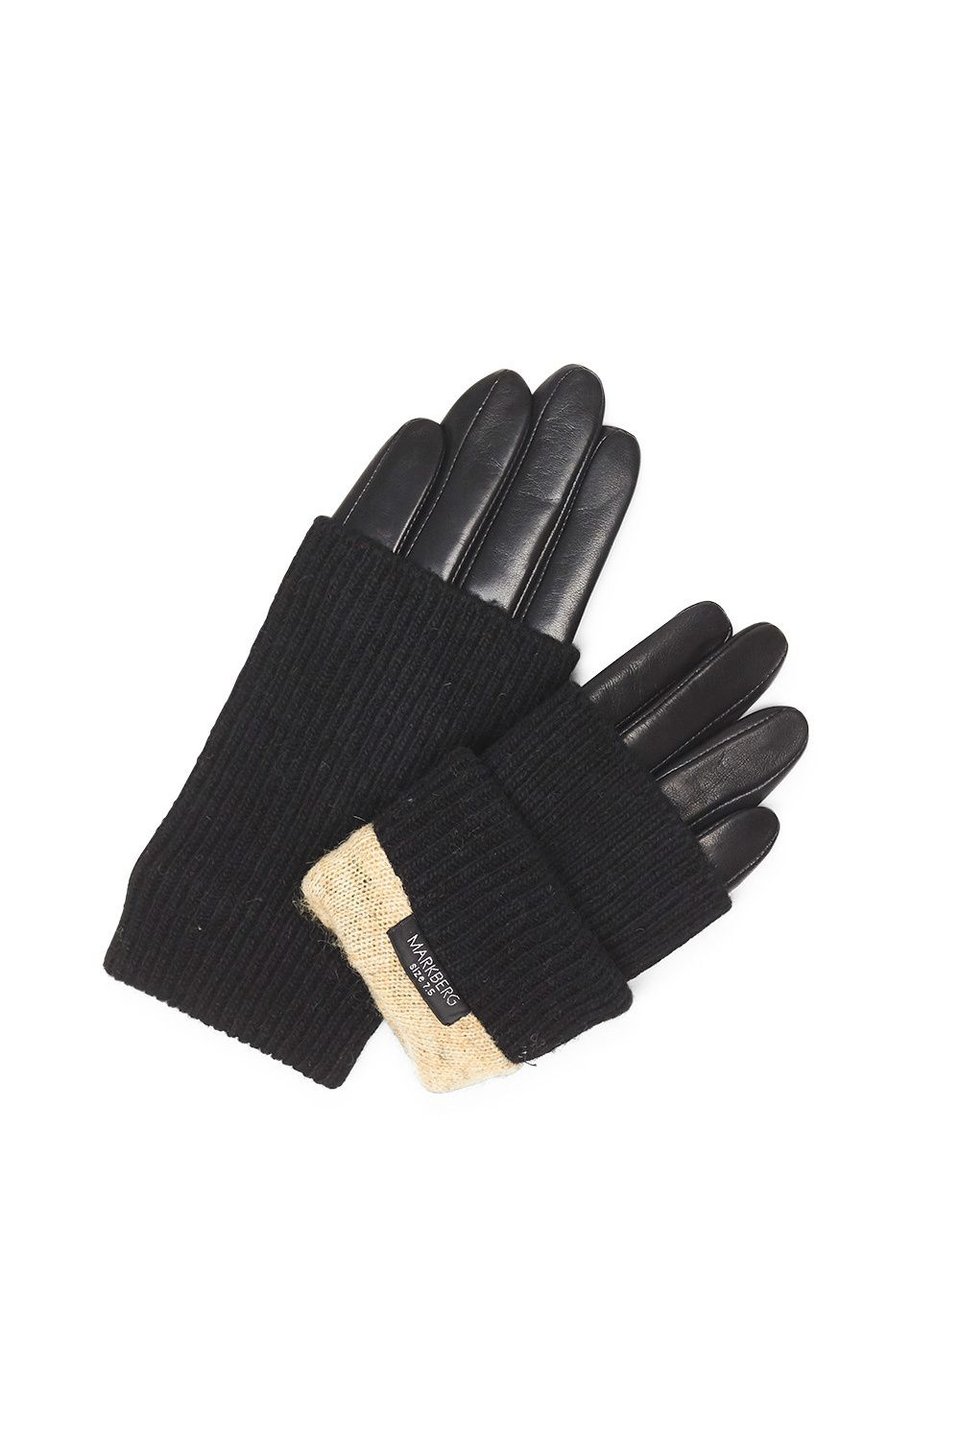 Markberg Helly Glove - Black